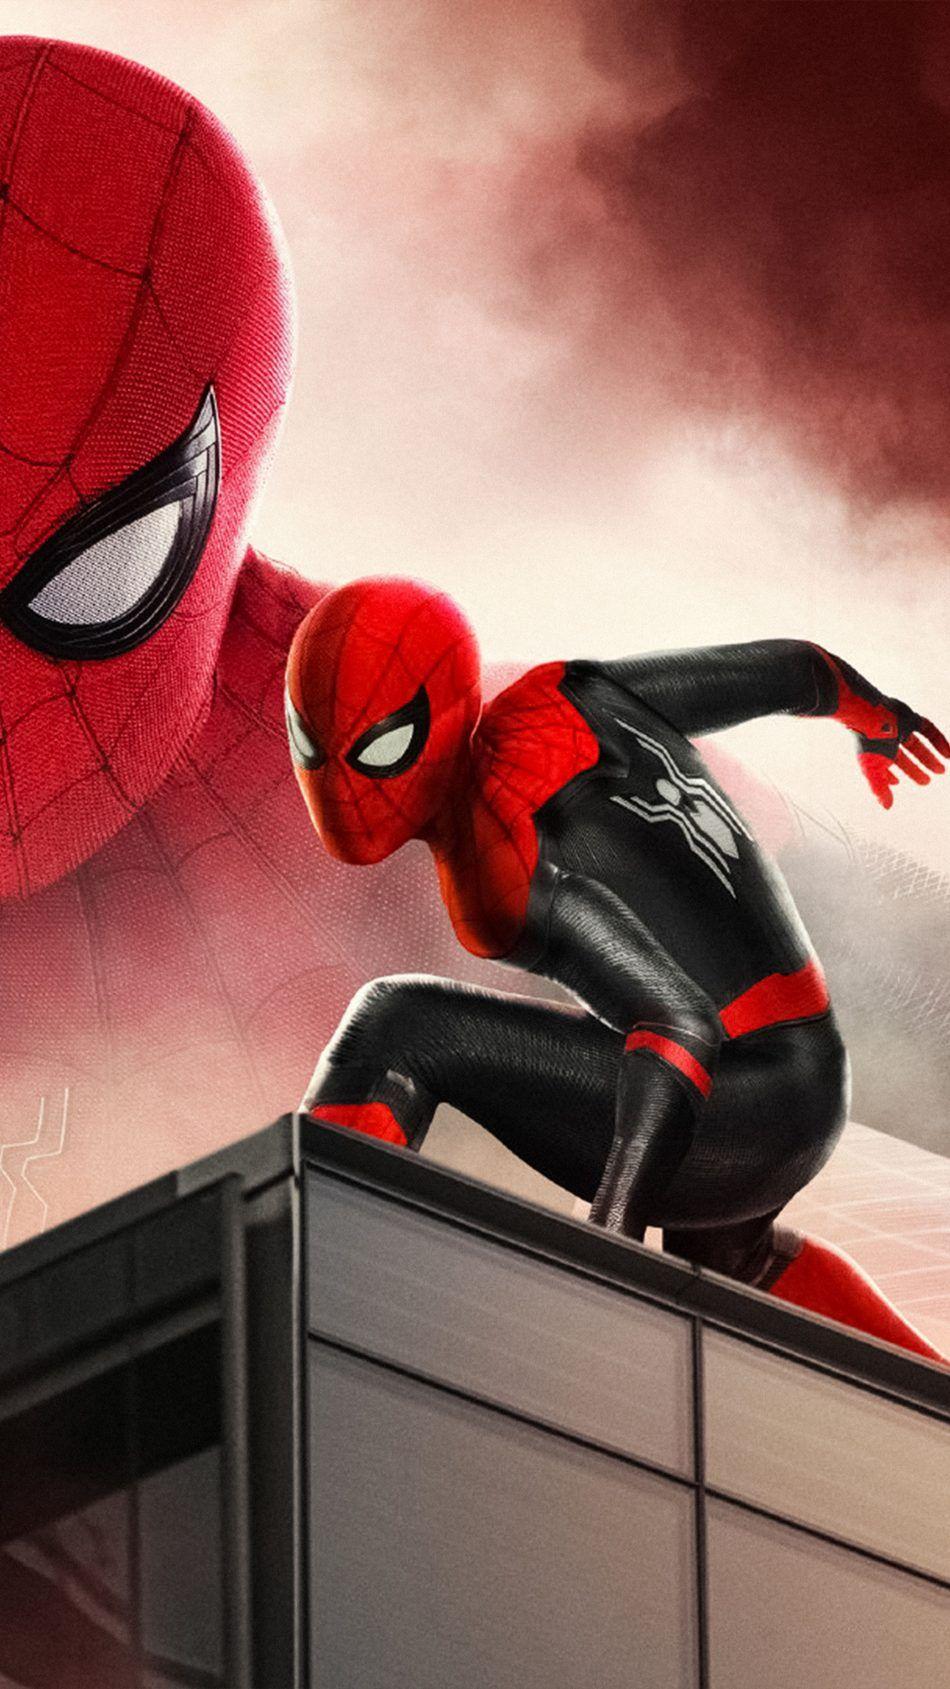 Peter Parker Ultra HD Spiderman Wallpaper 4k